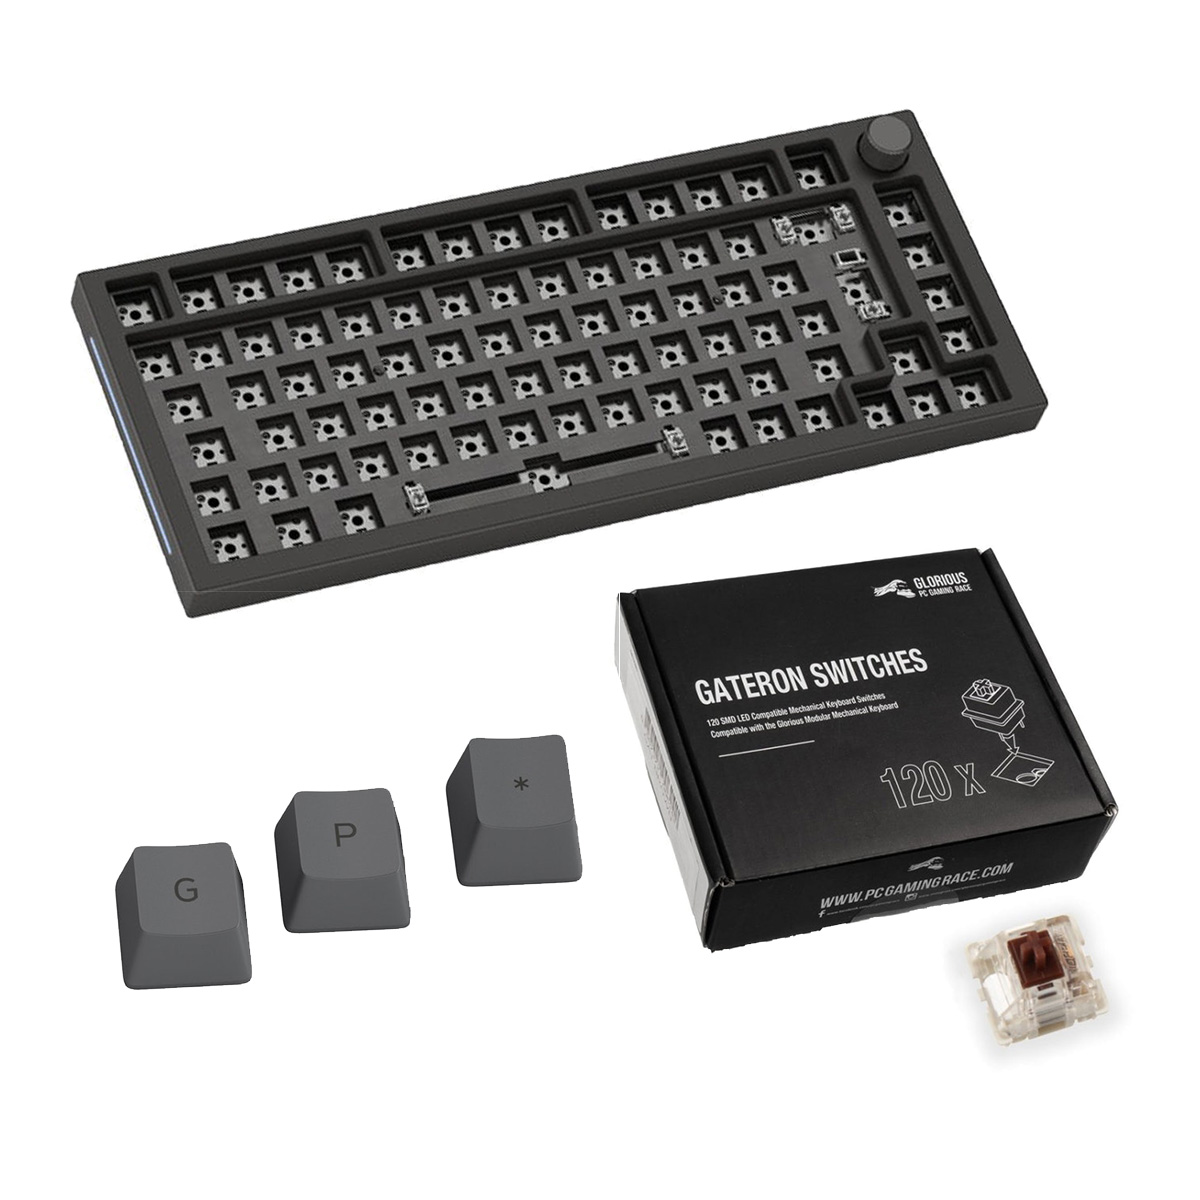 Glorious - Glorious GMMK Pro 75% Gaming Keyboard Epic Discount Bundle - Black Frame